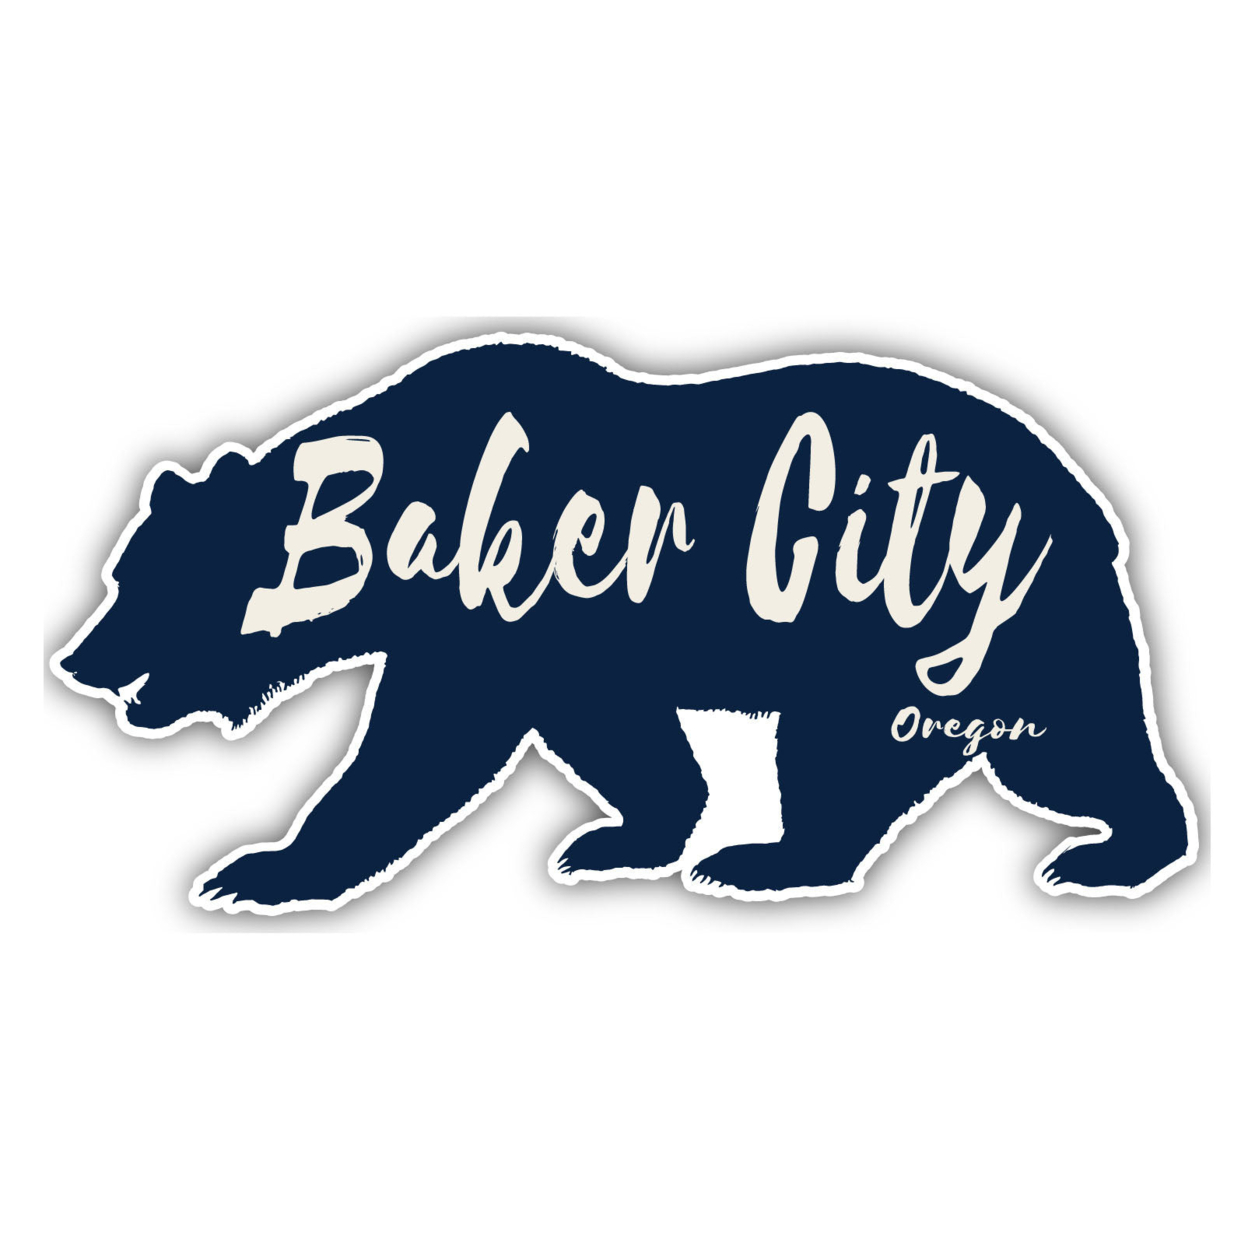 Baker City Oregon Souvenir Decorative Stickers (Choose Theme And Size) - Single Unit, 6-Inch, Bear